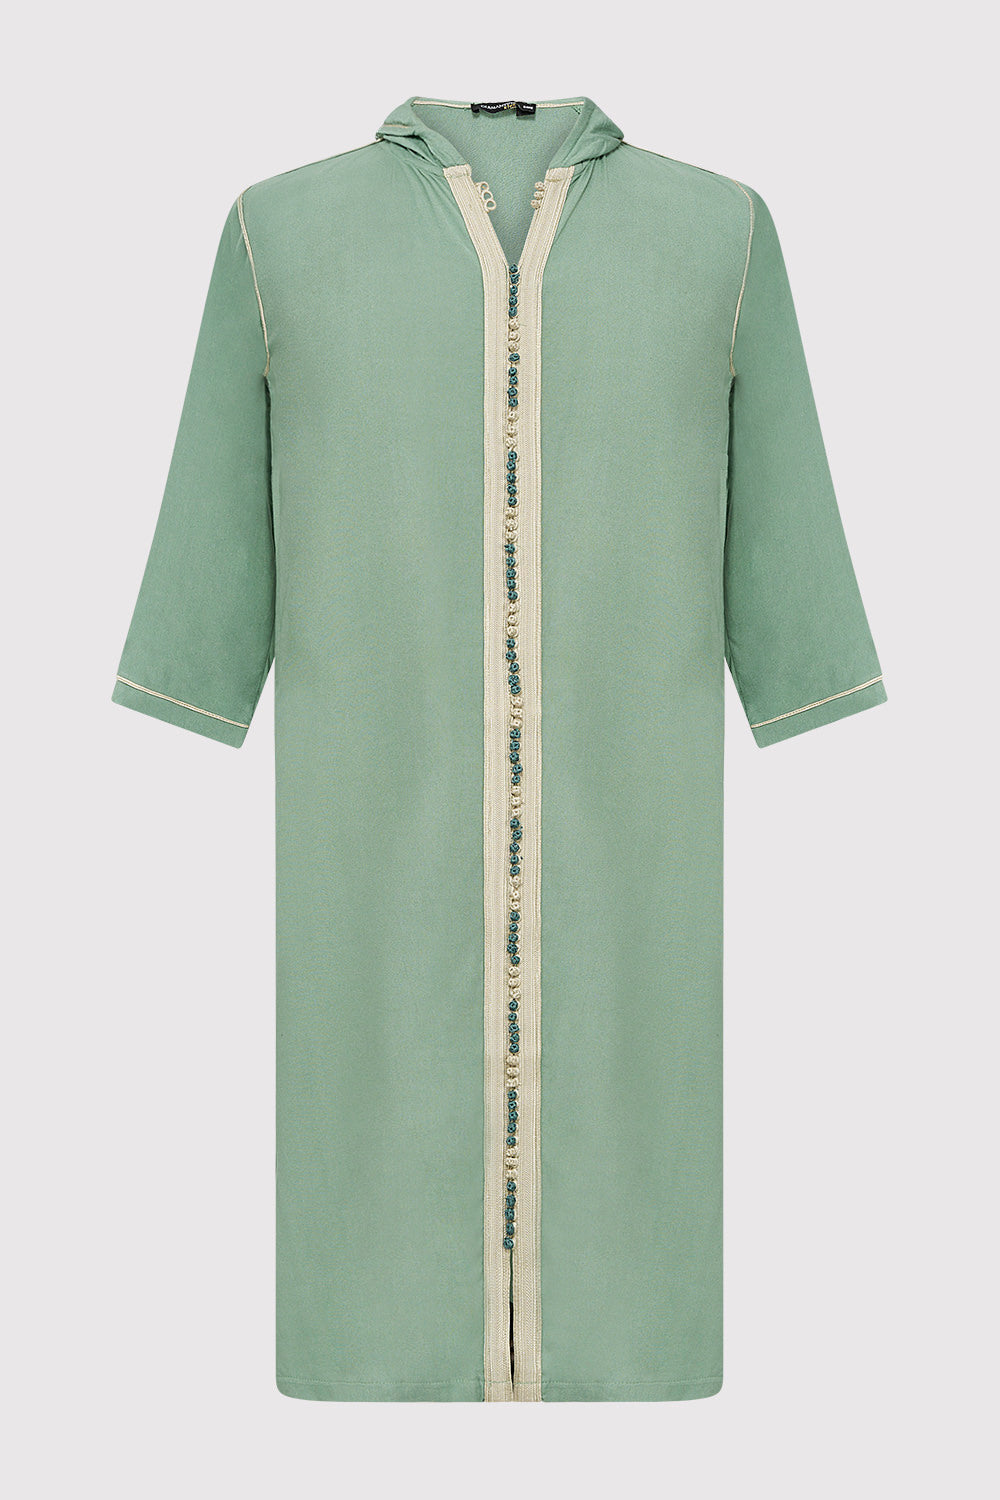 Djellaba Jad Boy's Hooded Long Sleeve Full-Length Robe Thobe in Green (2-12yrs)